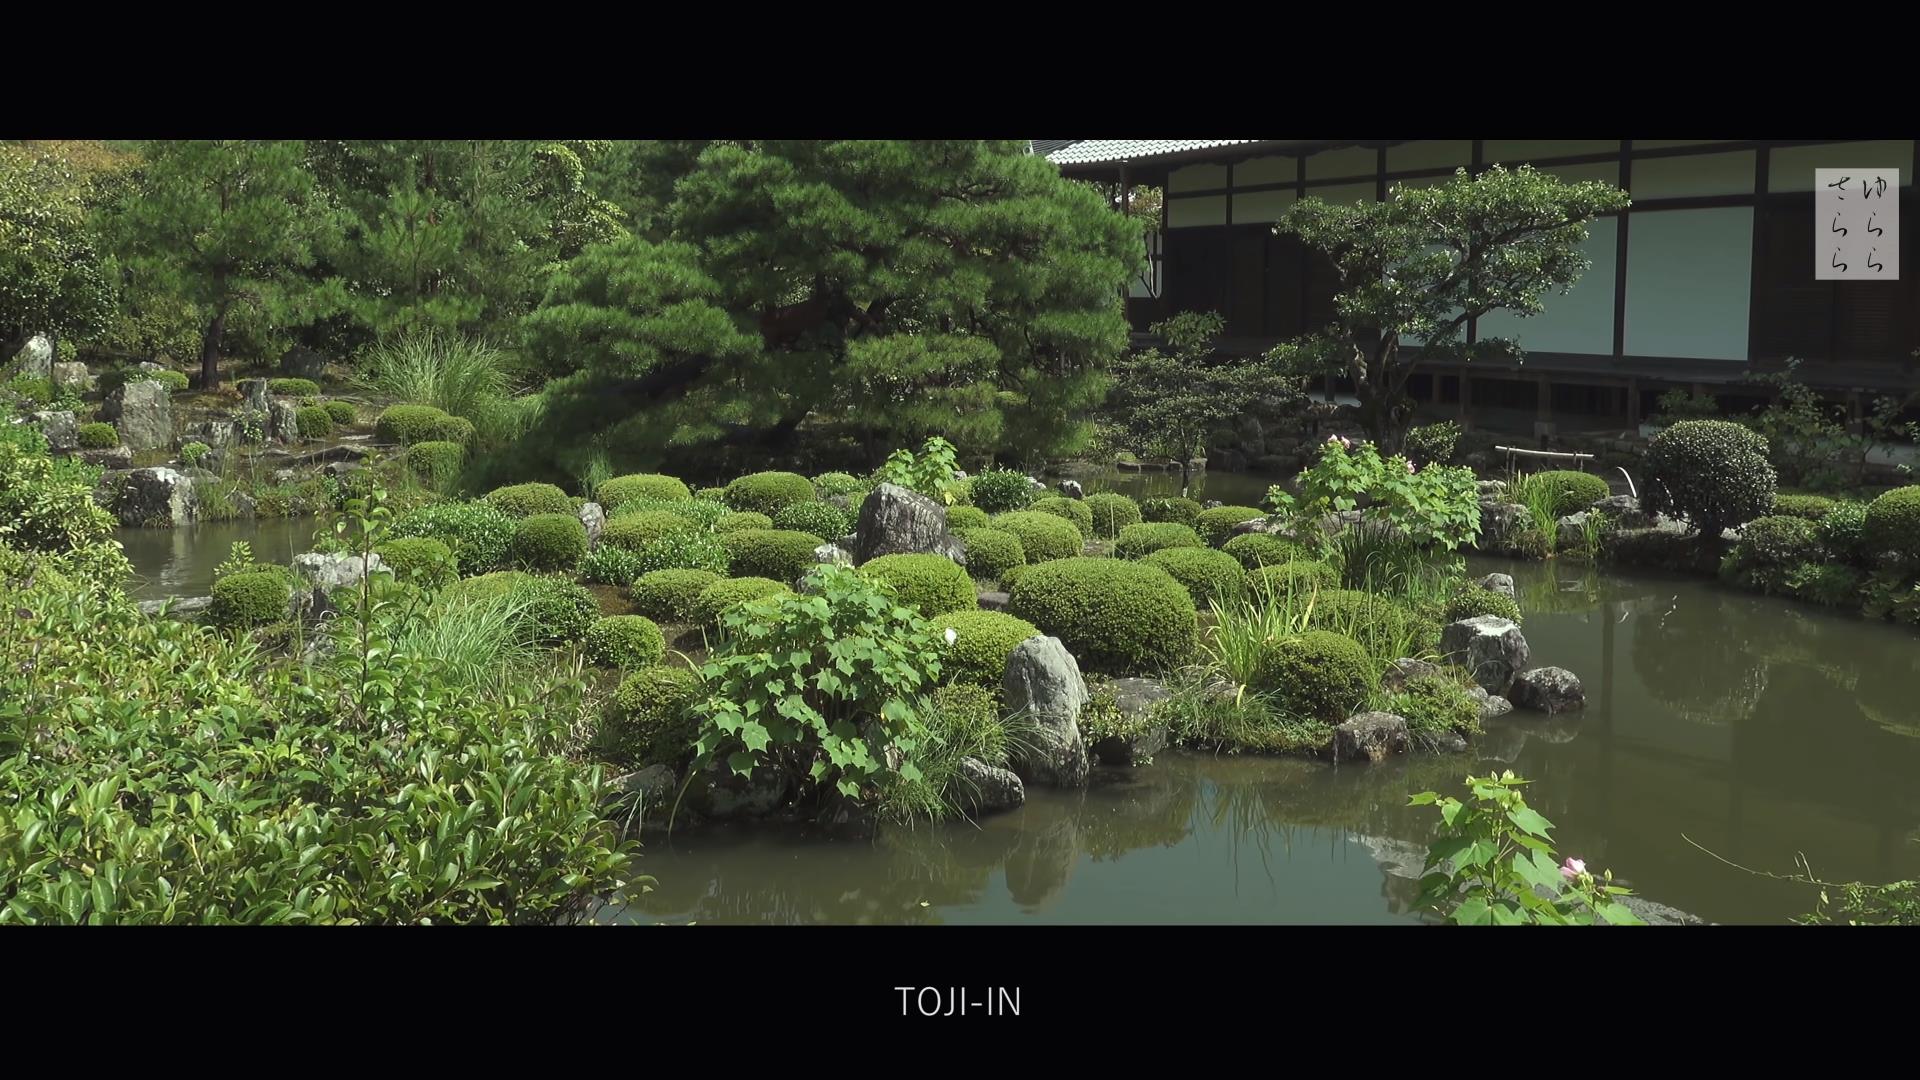 Wabi-Sabi-侘寂庭院,侘寂庭院,日本庭園,侘寂设计,日式侘寂庭院,100 KYOTO GARDENS,京都日本庭園100,侘寂视频下载